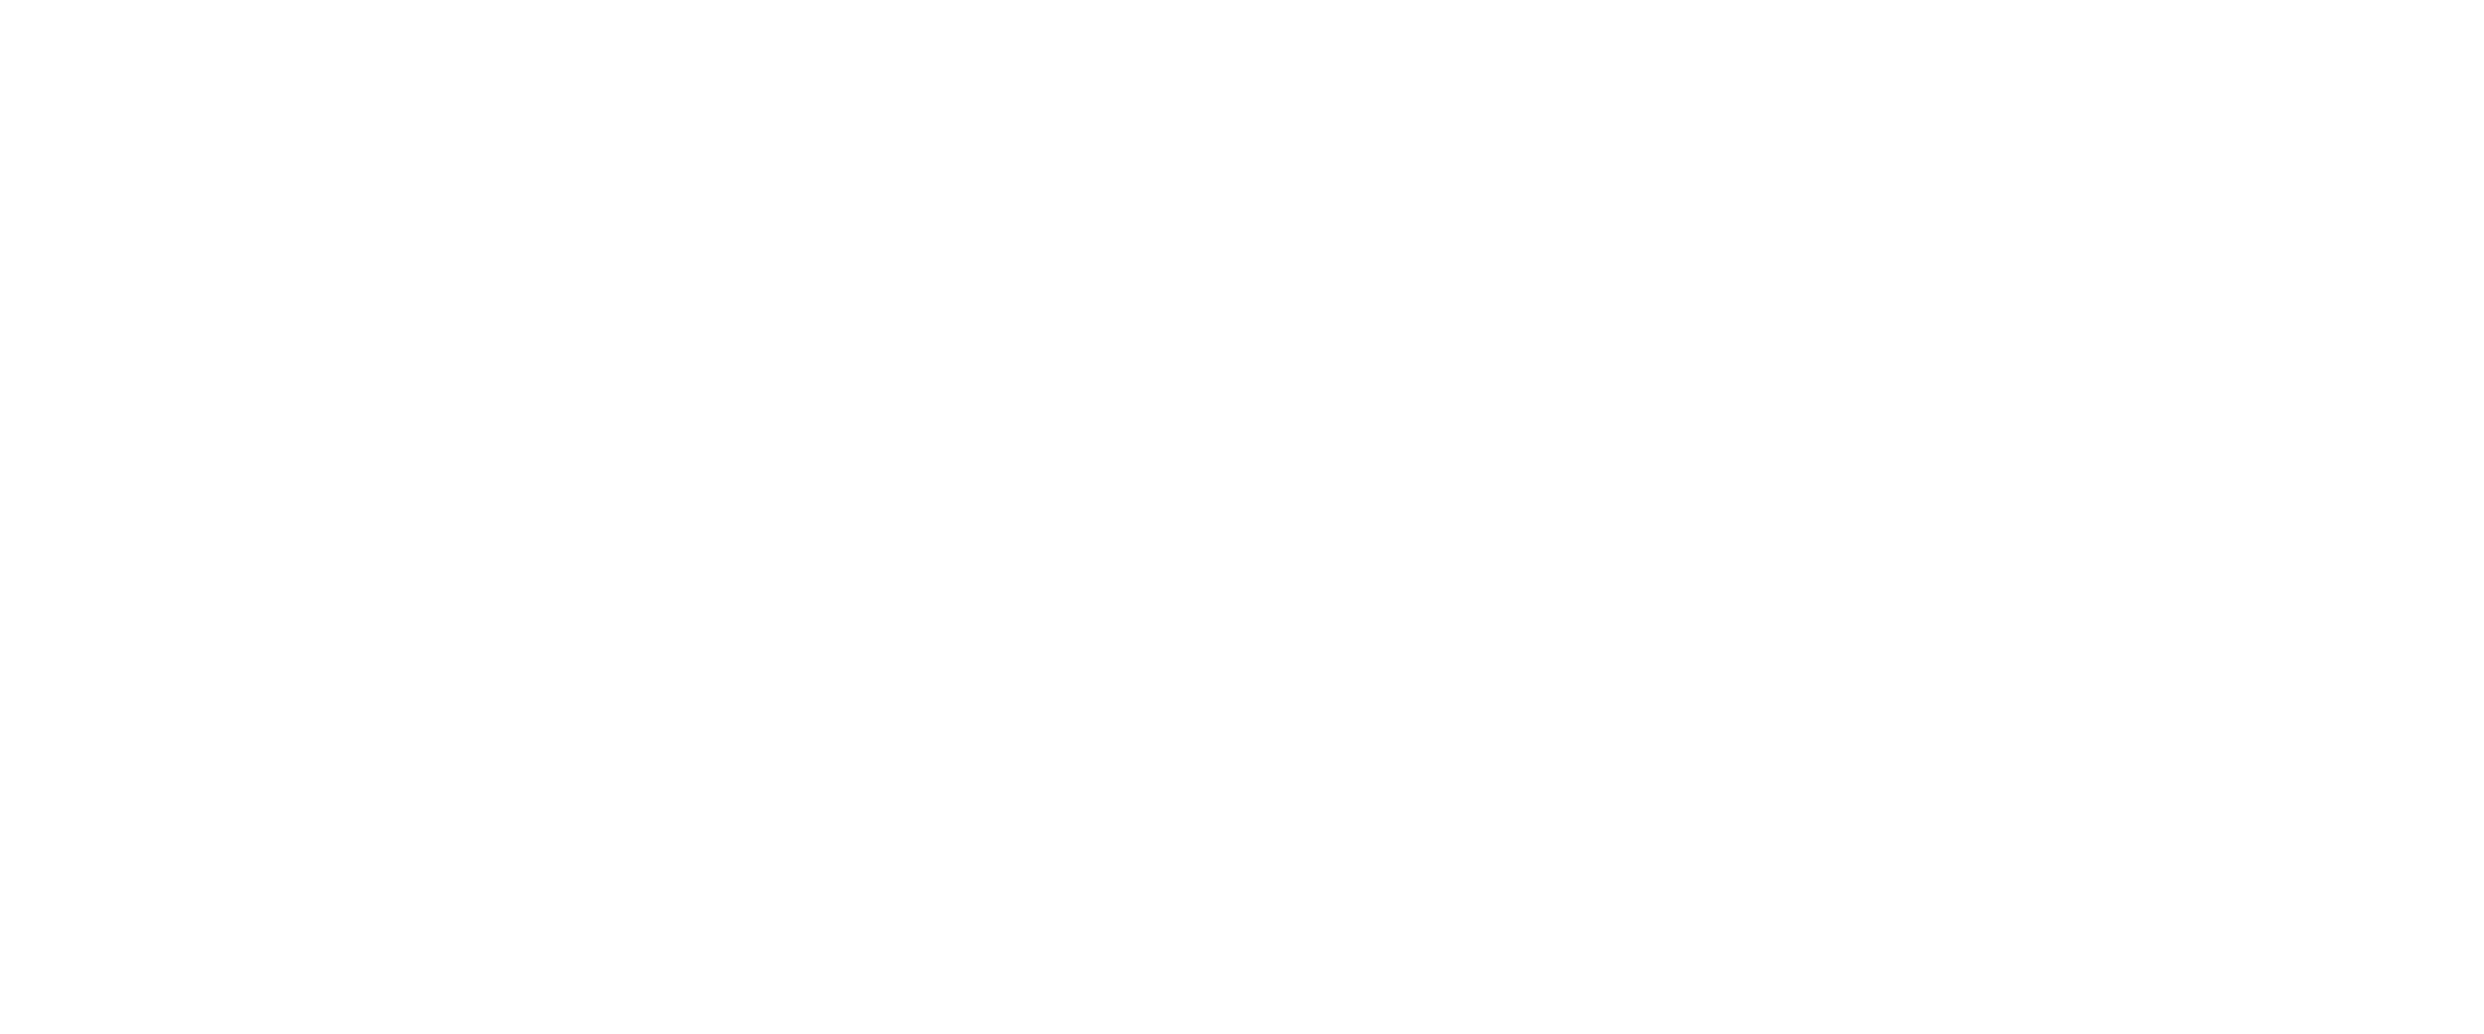 ThirdLaw branding and web design - Chango Logo White